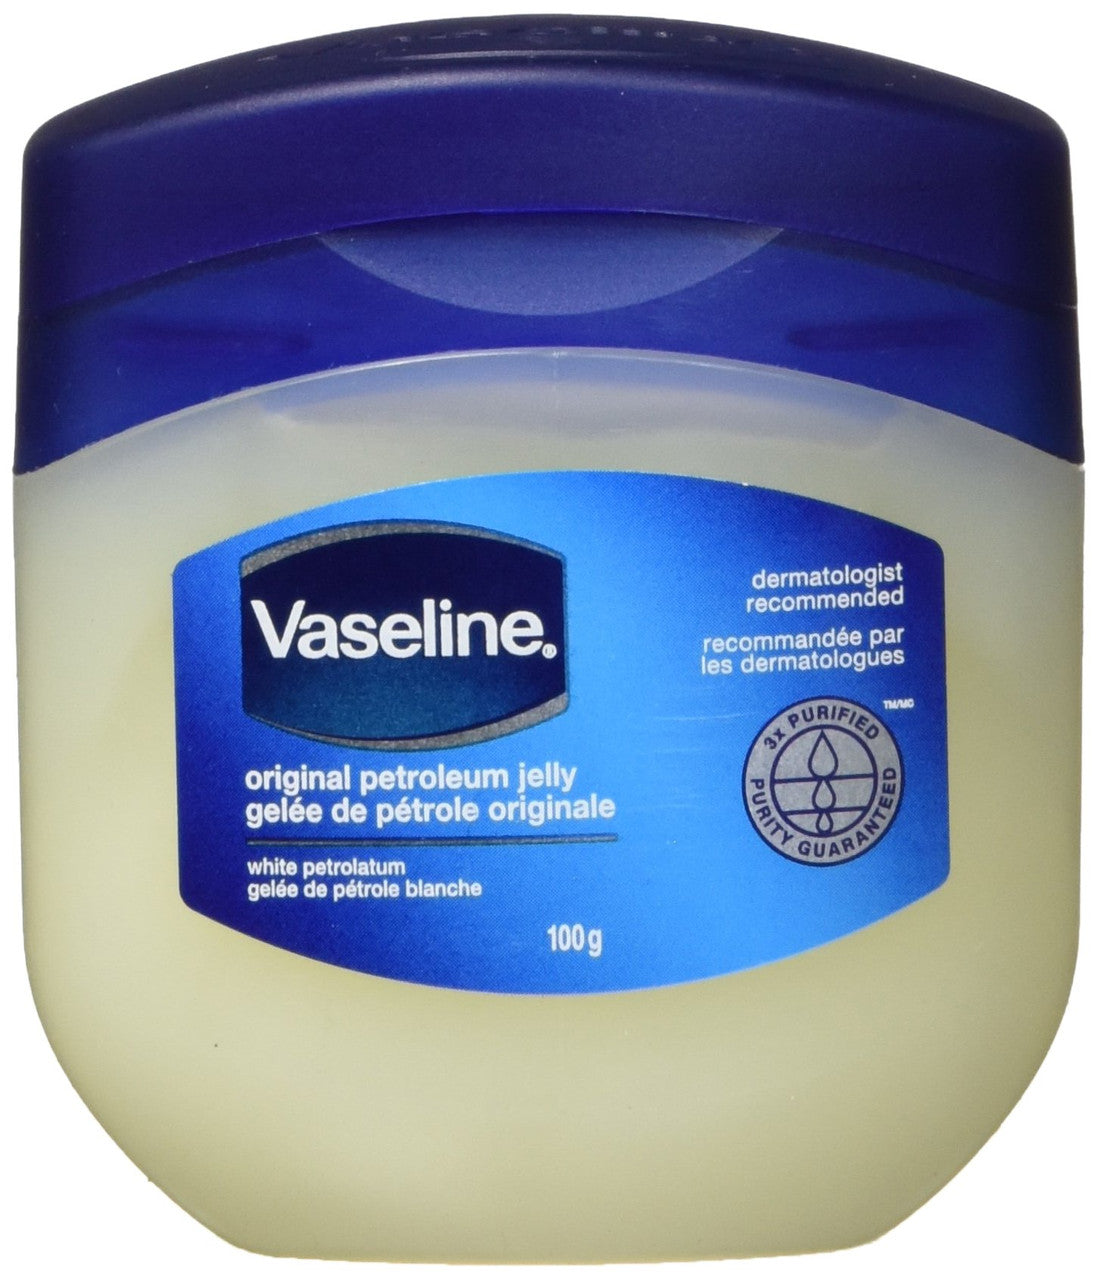 Vaseline Original Petroleum Jelly, 100g/3.5 oz., (Imported from Canada)